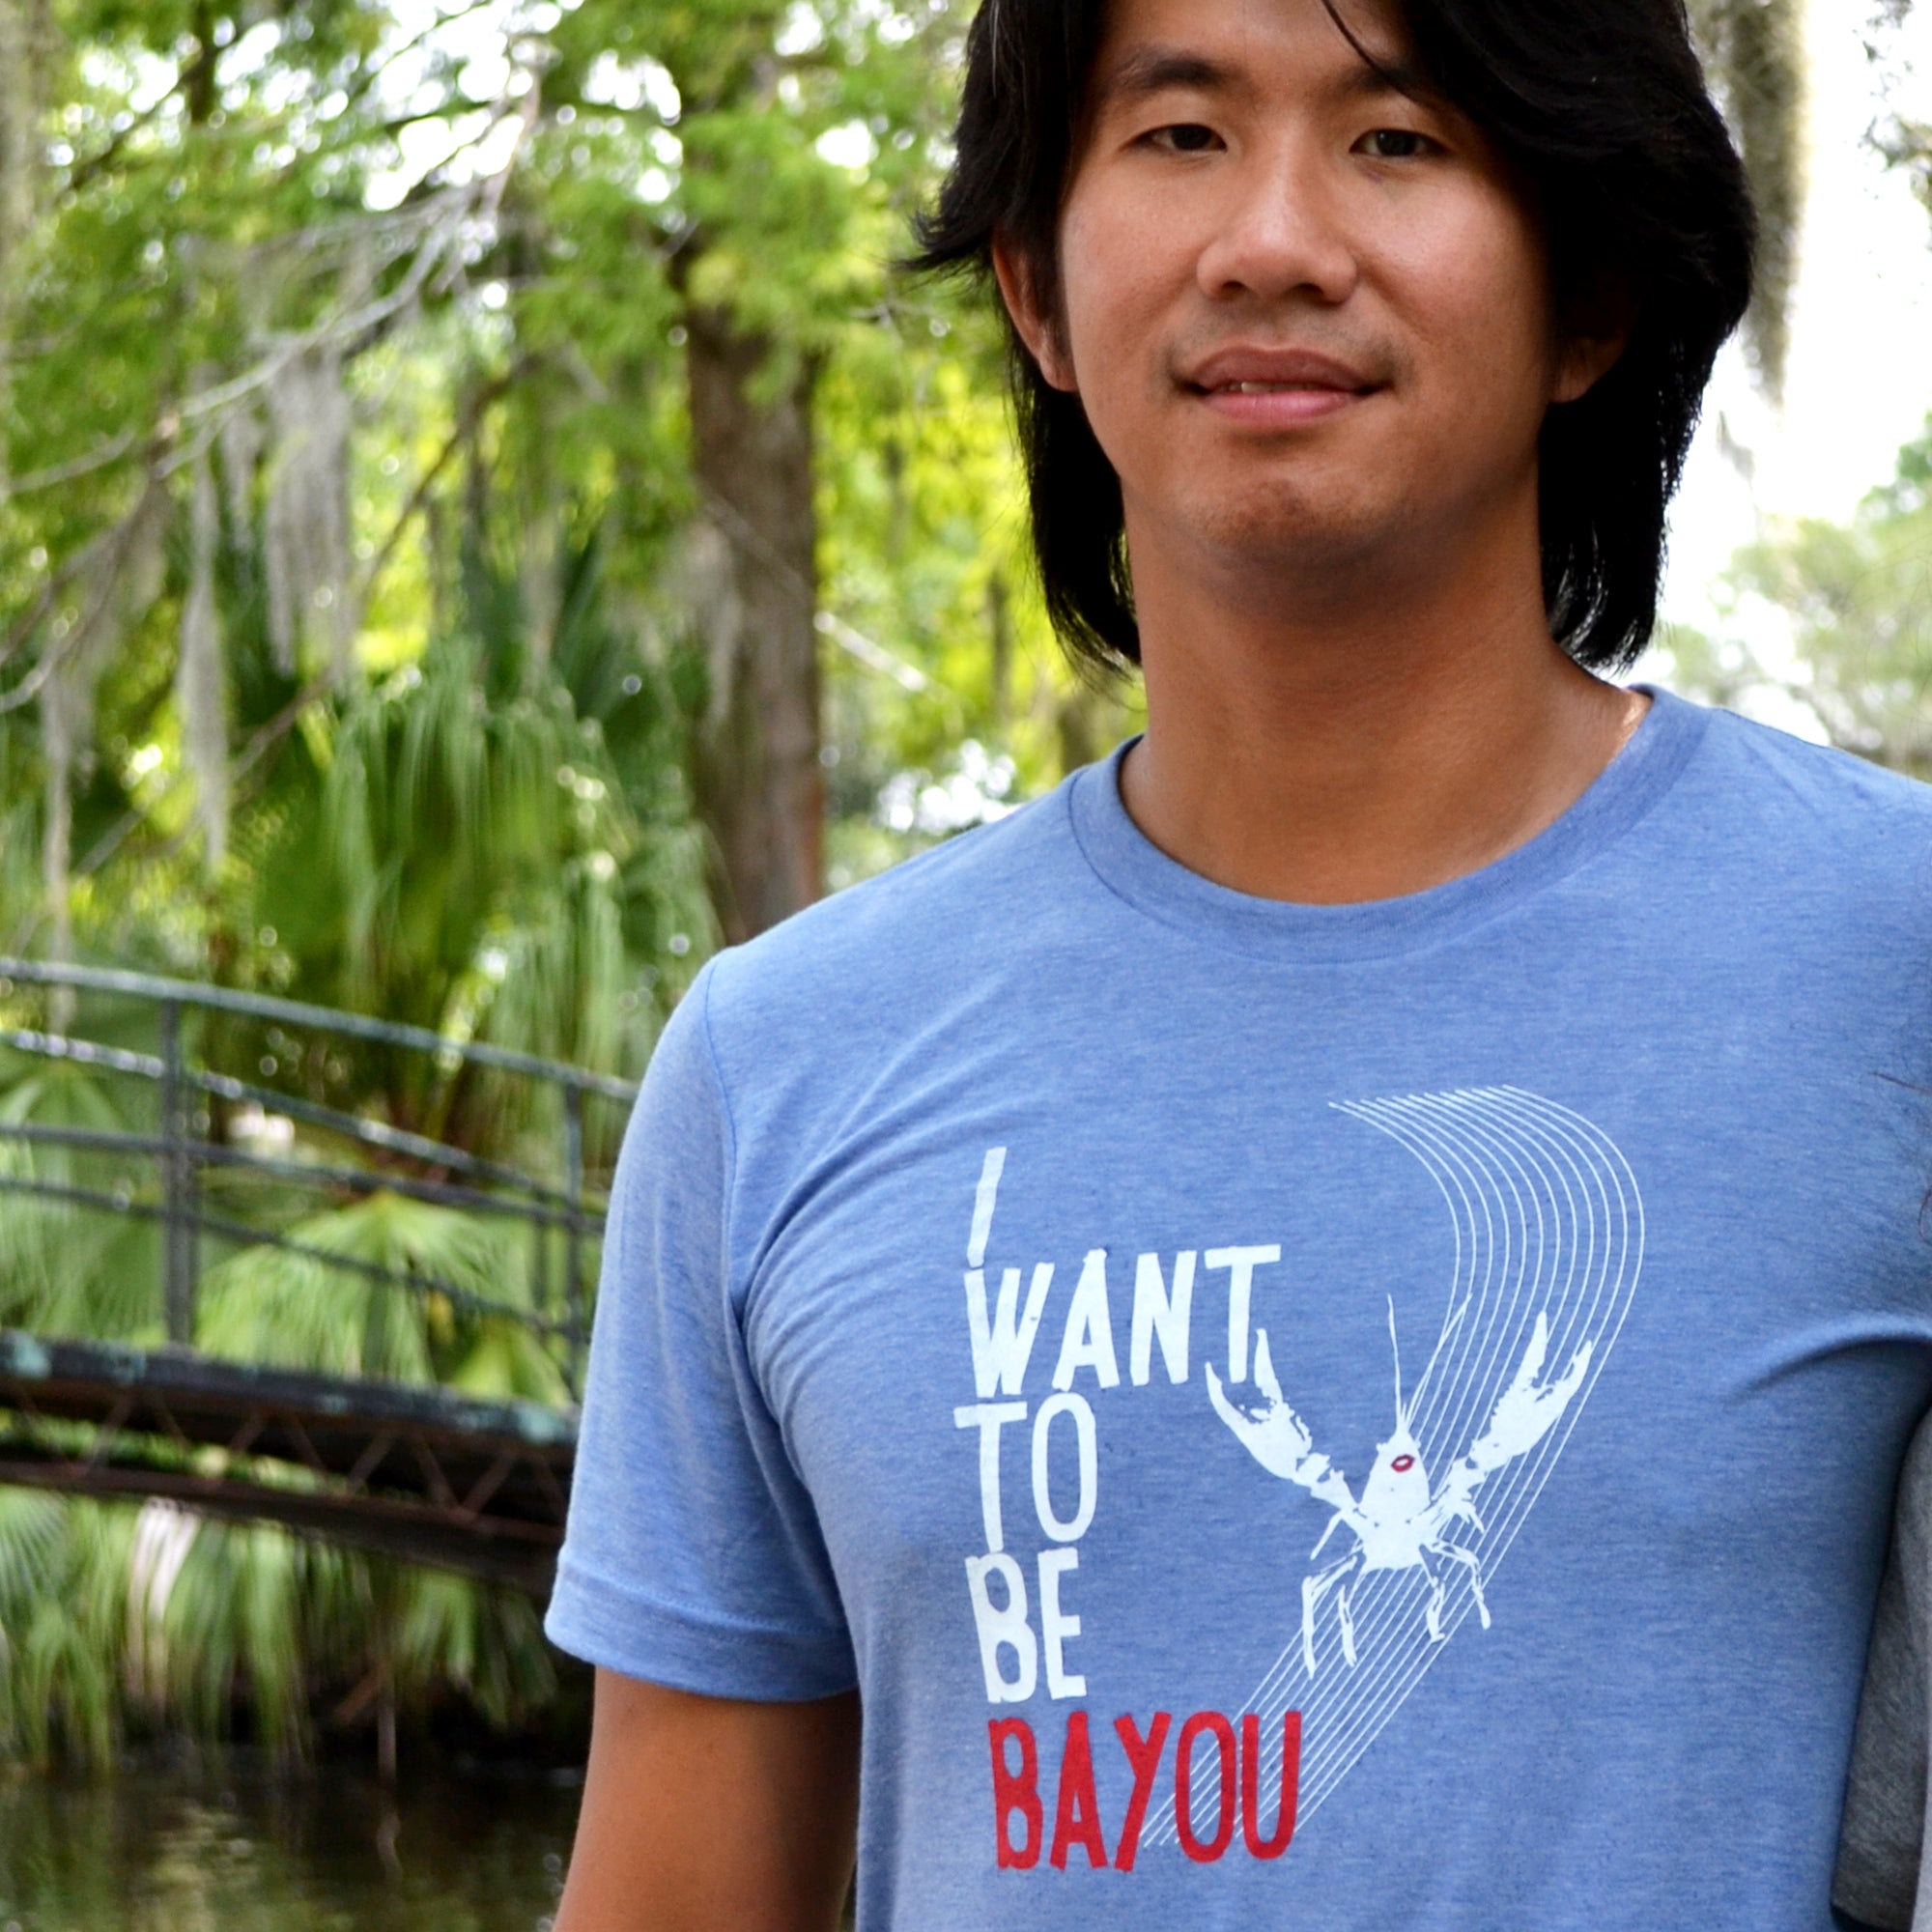 The Bayou Crawfish Shirt